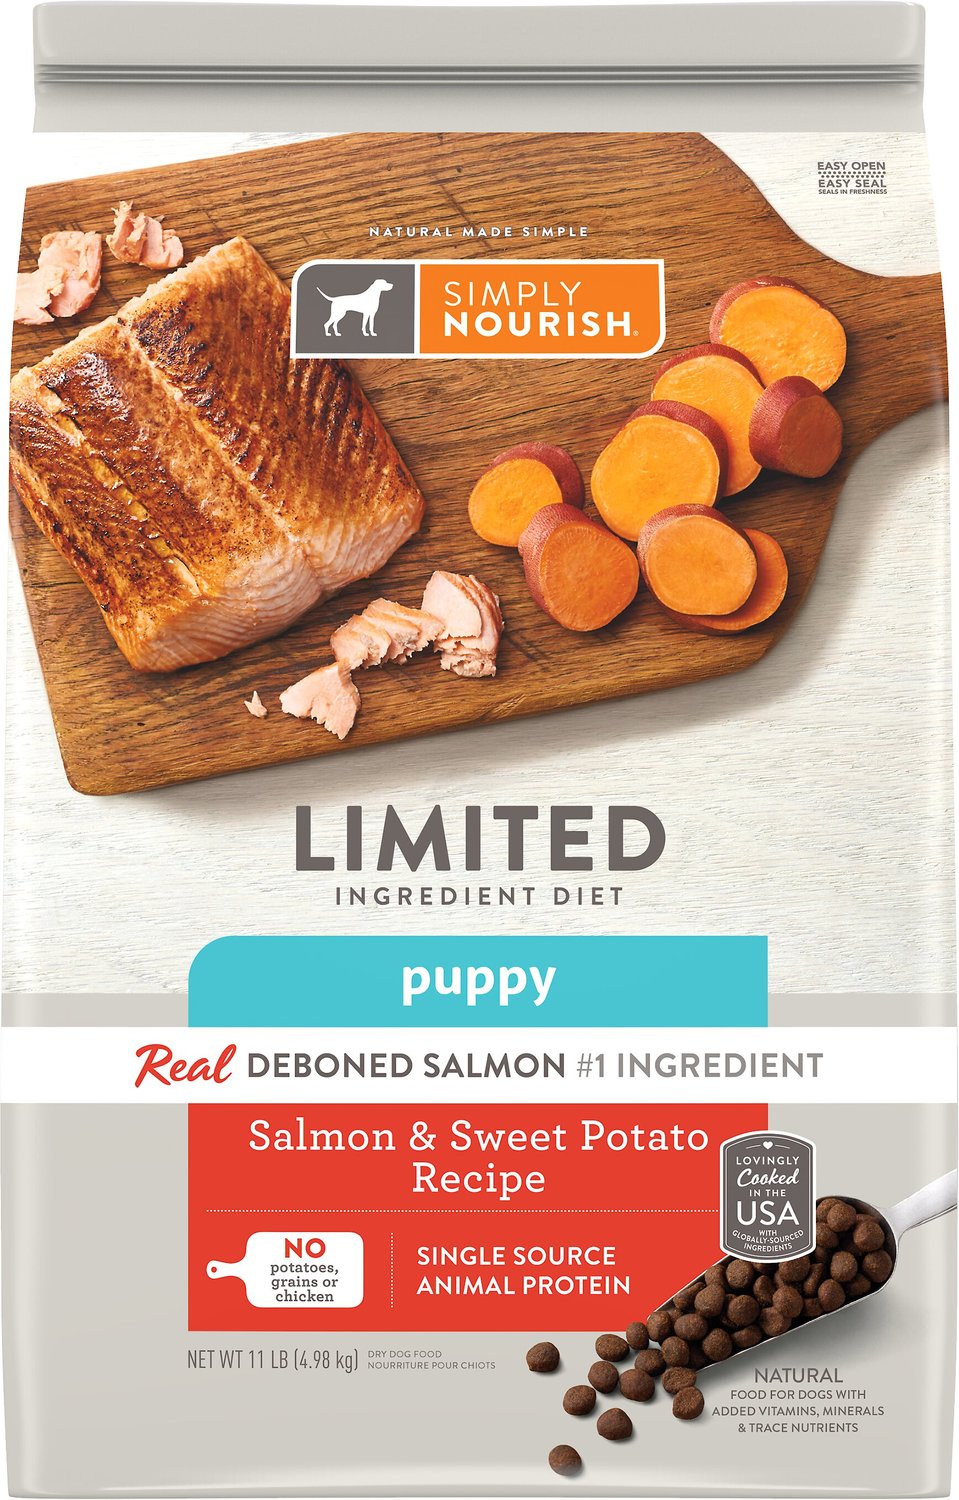 Simply Nourish Limited Ingredient Diet Sweet Potato & Salmon Recipe